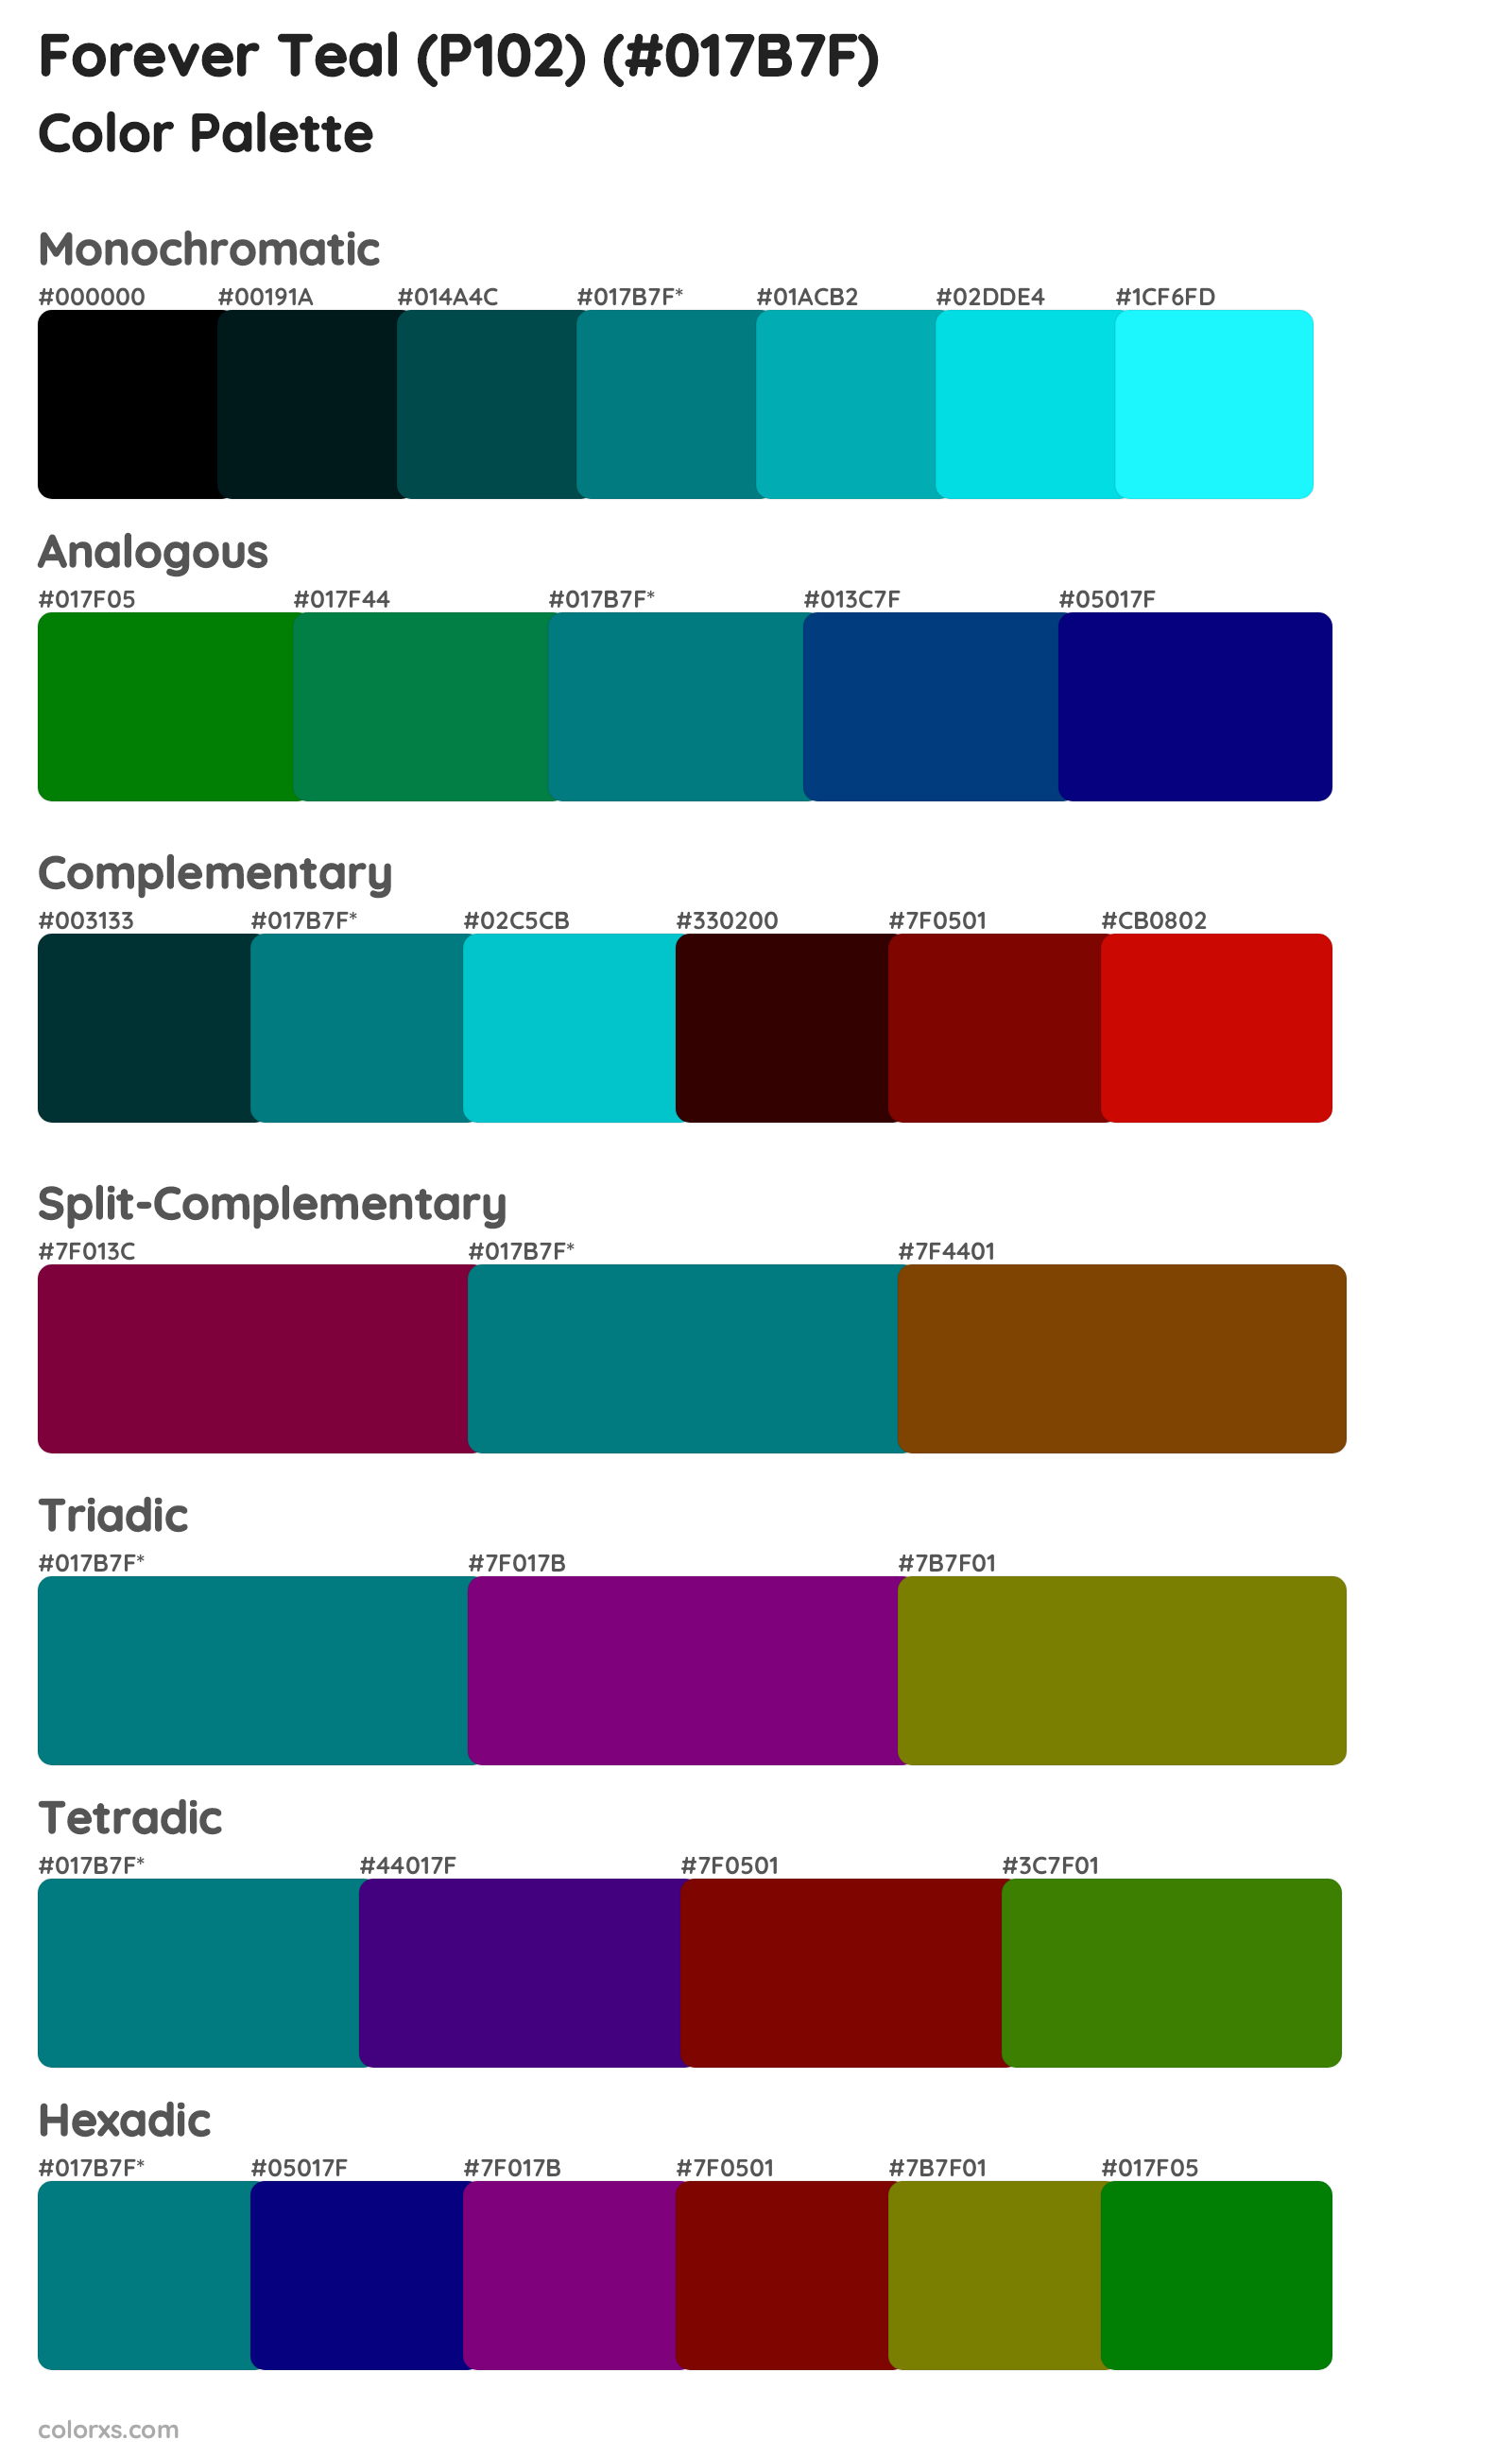 Forever Teal (P102) Color Scheme Palettes